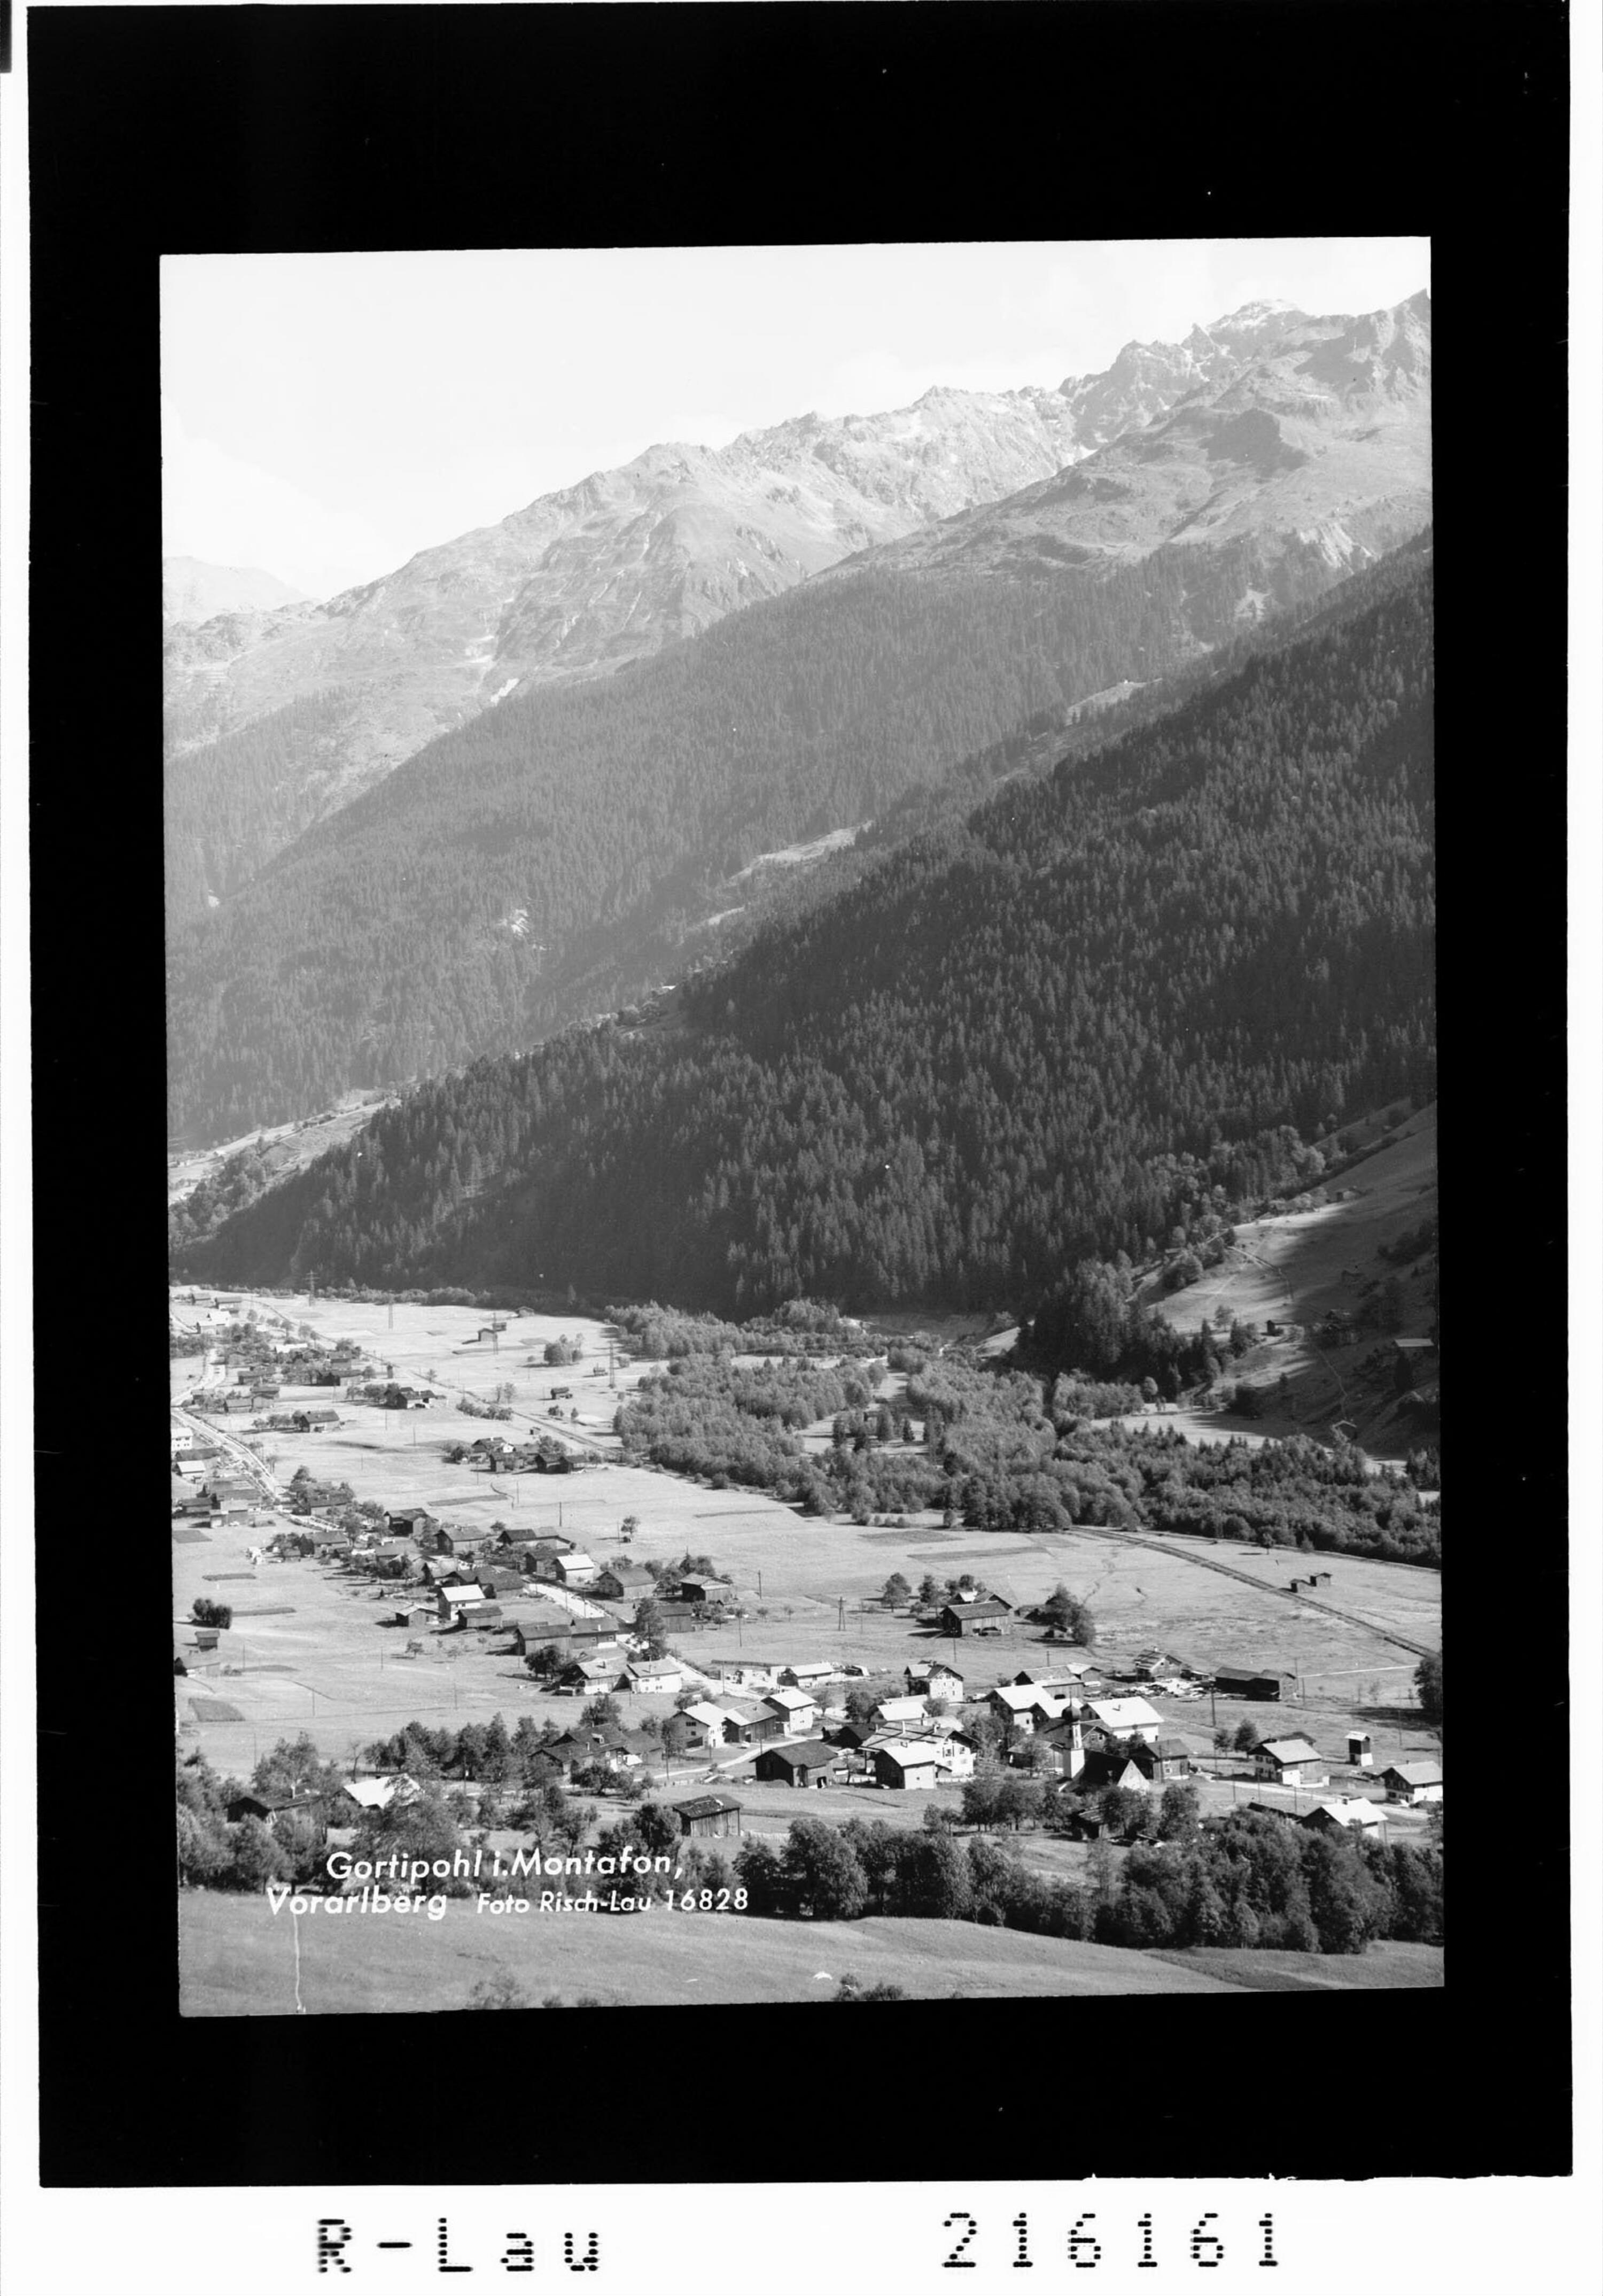 Gortipohl im Montafon, Vorarlberg></div>


    <hr>
    <div class=